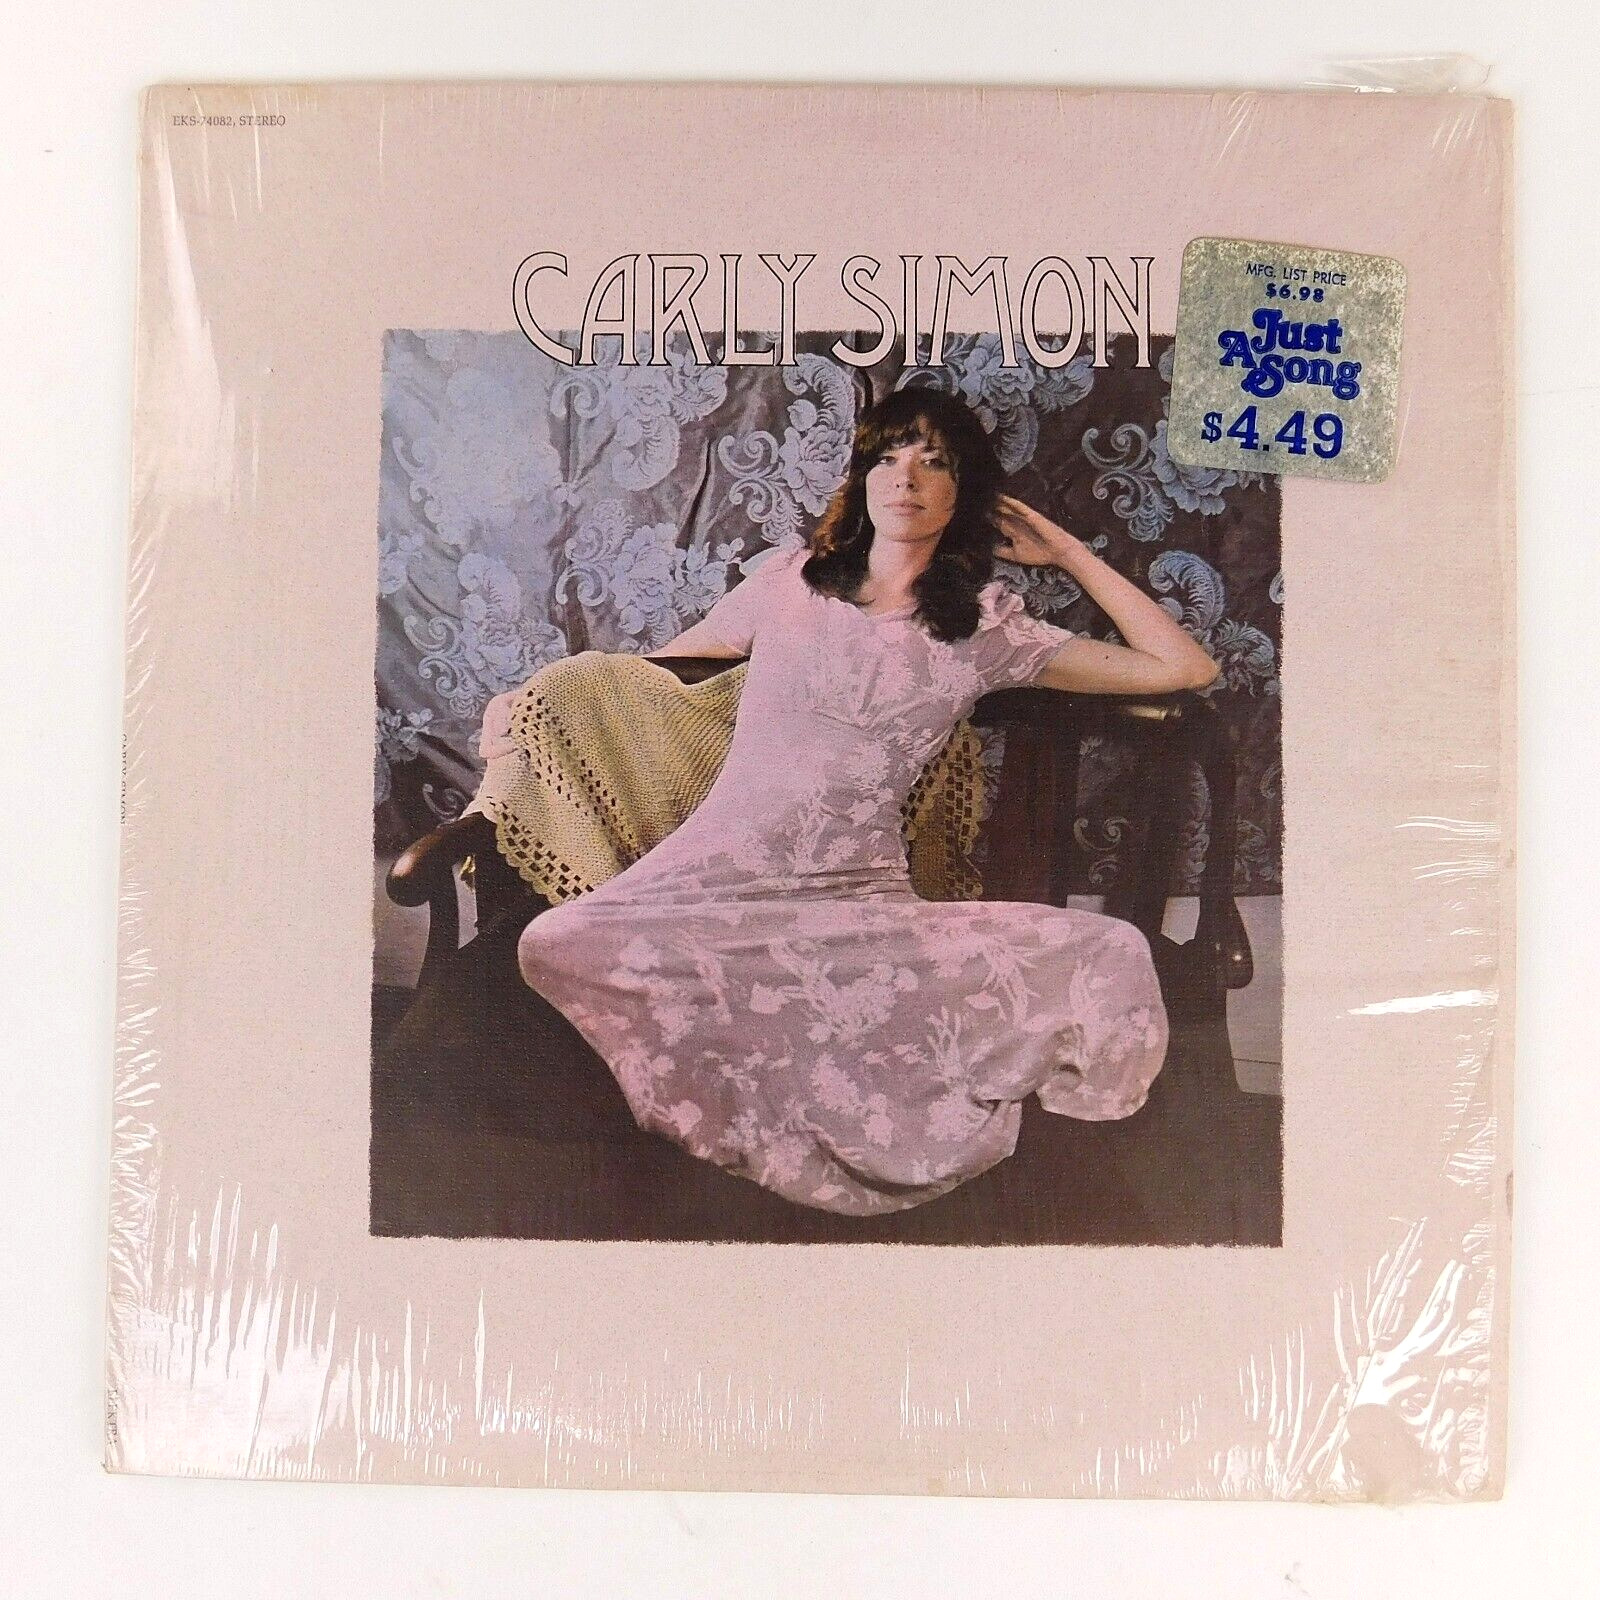 Vinyl LP Carley Simon-self titled, poster 1971  VG+ [add'l LPs , 75¢ ship]